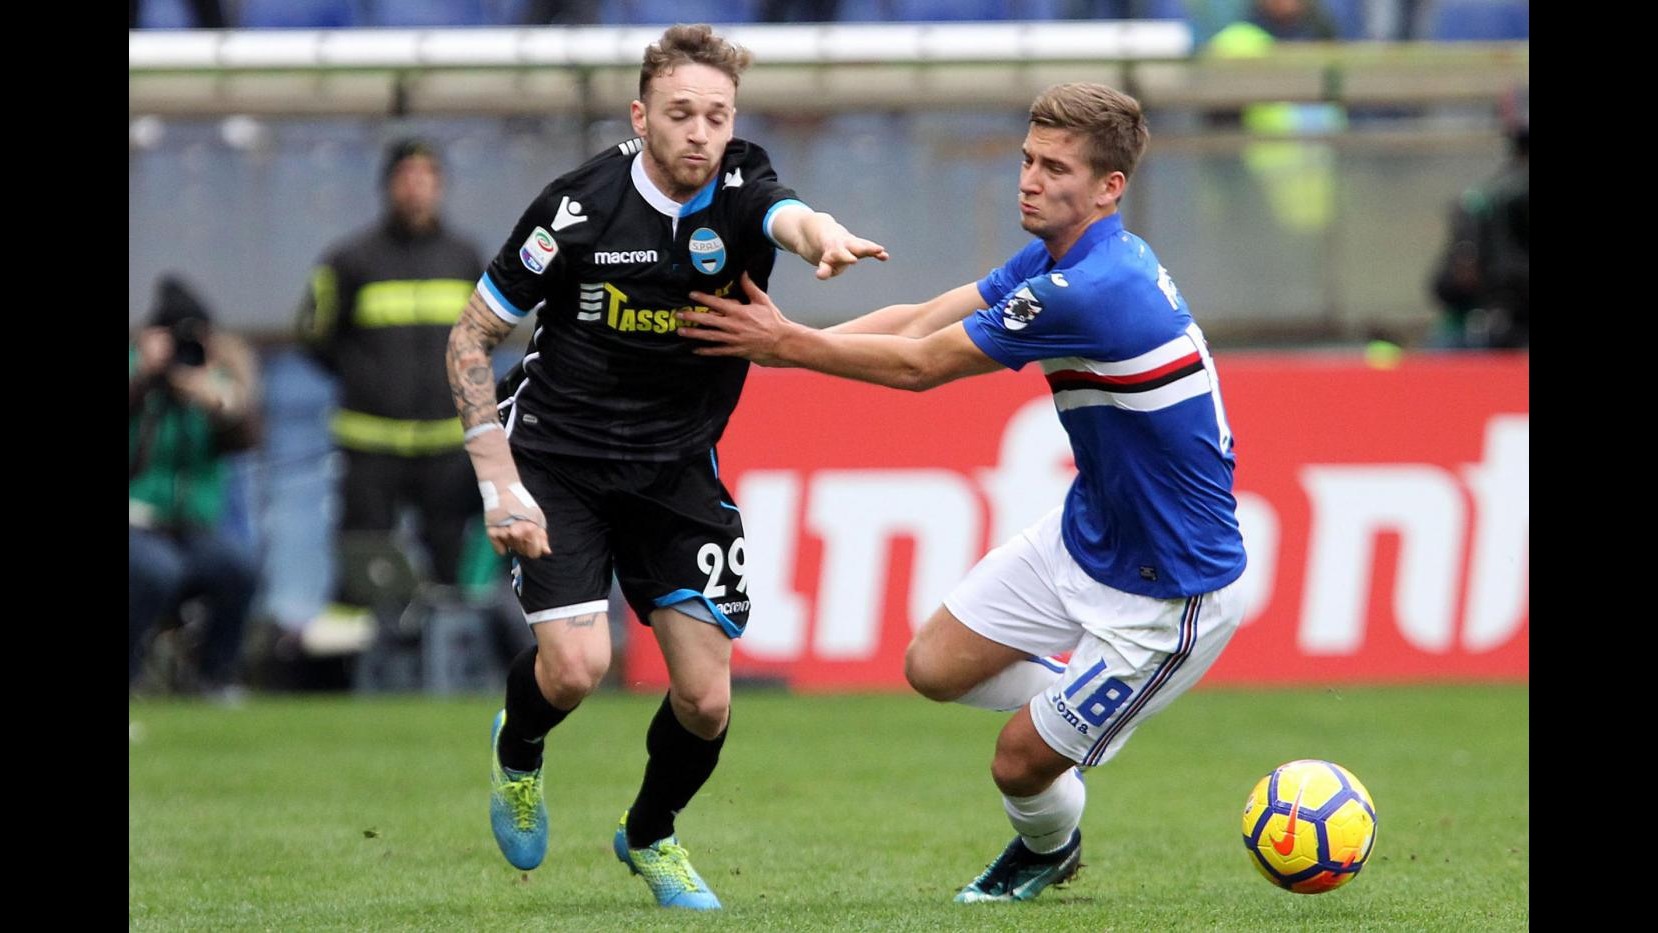 Serie A, Sampdoria-Spal 2-0 | IL FOTORACCONTO